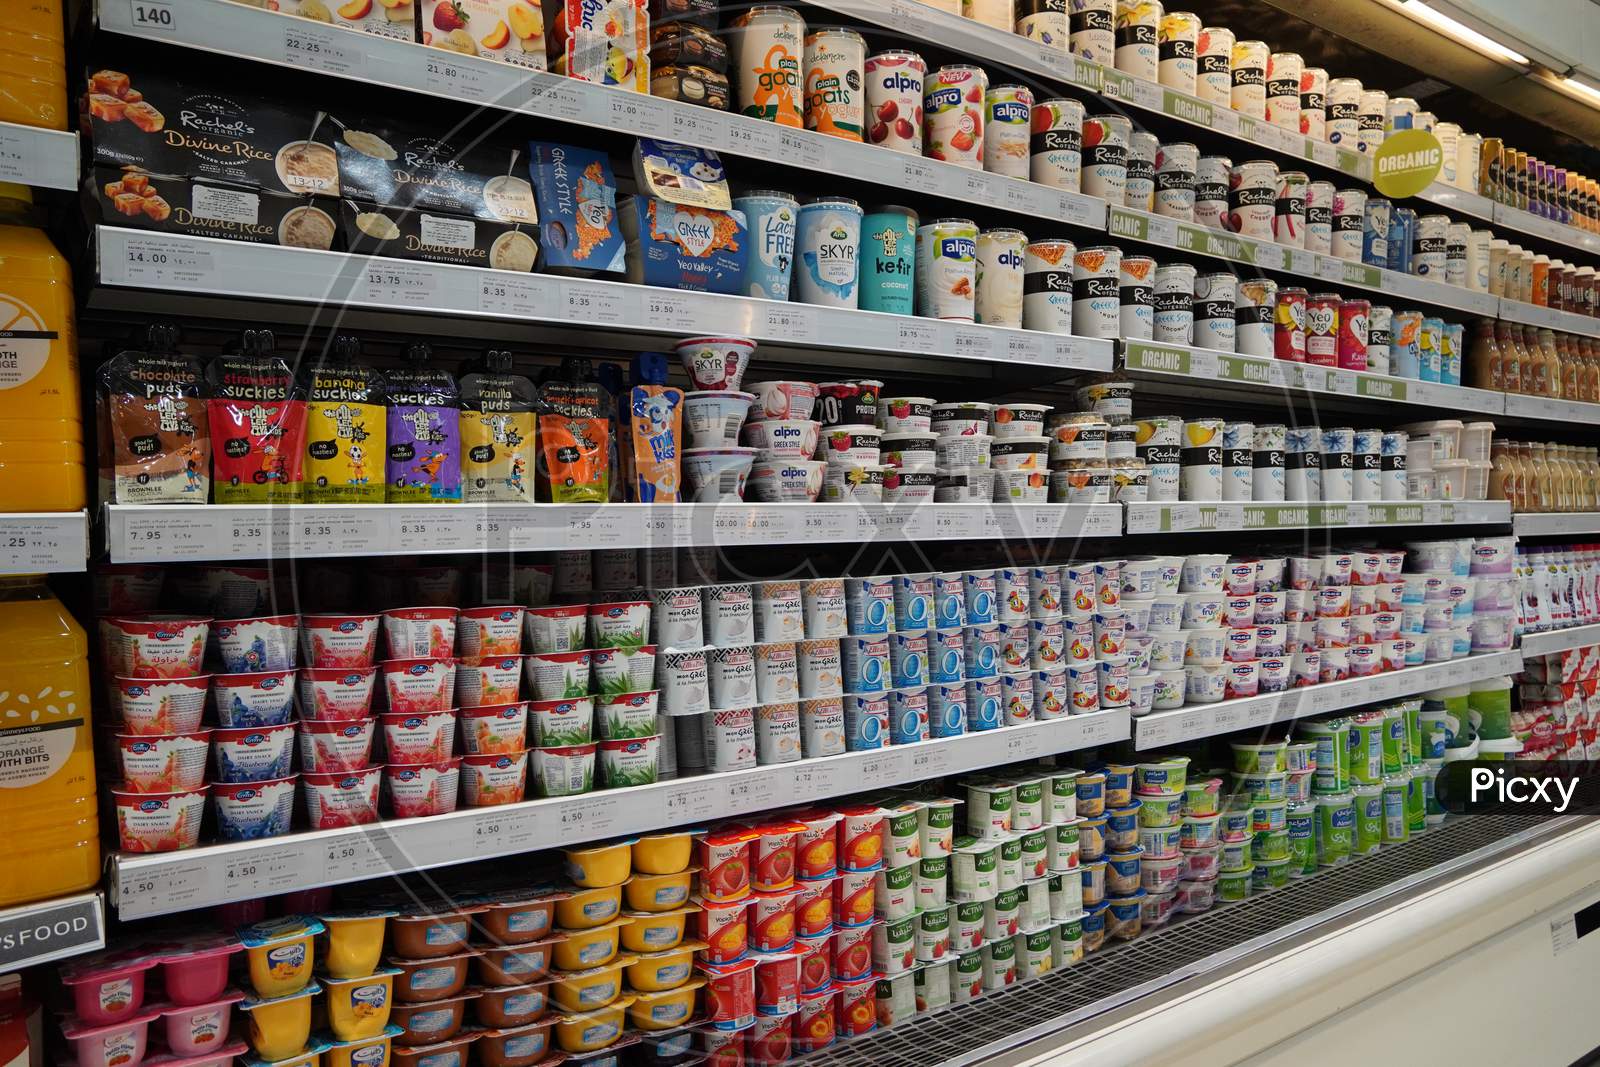 Variety Of Yogurt In Shelf In Shop. Greek, Plain, Flavored, Fruit Yogurt. Interior View Of Huge Fridge With Various Brand Foods And Drinks. Yogurt And Dairy Product Sold. India